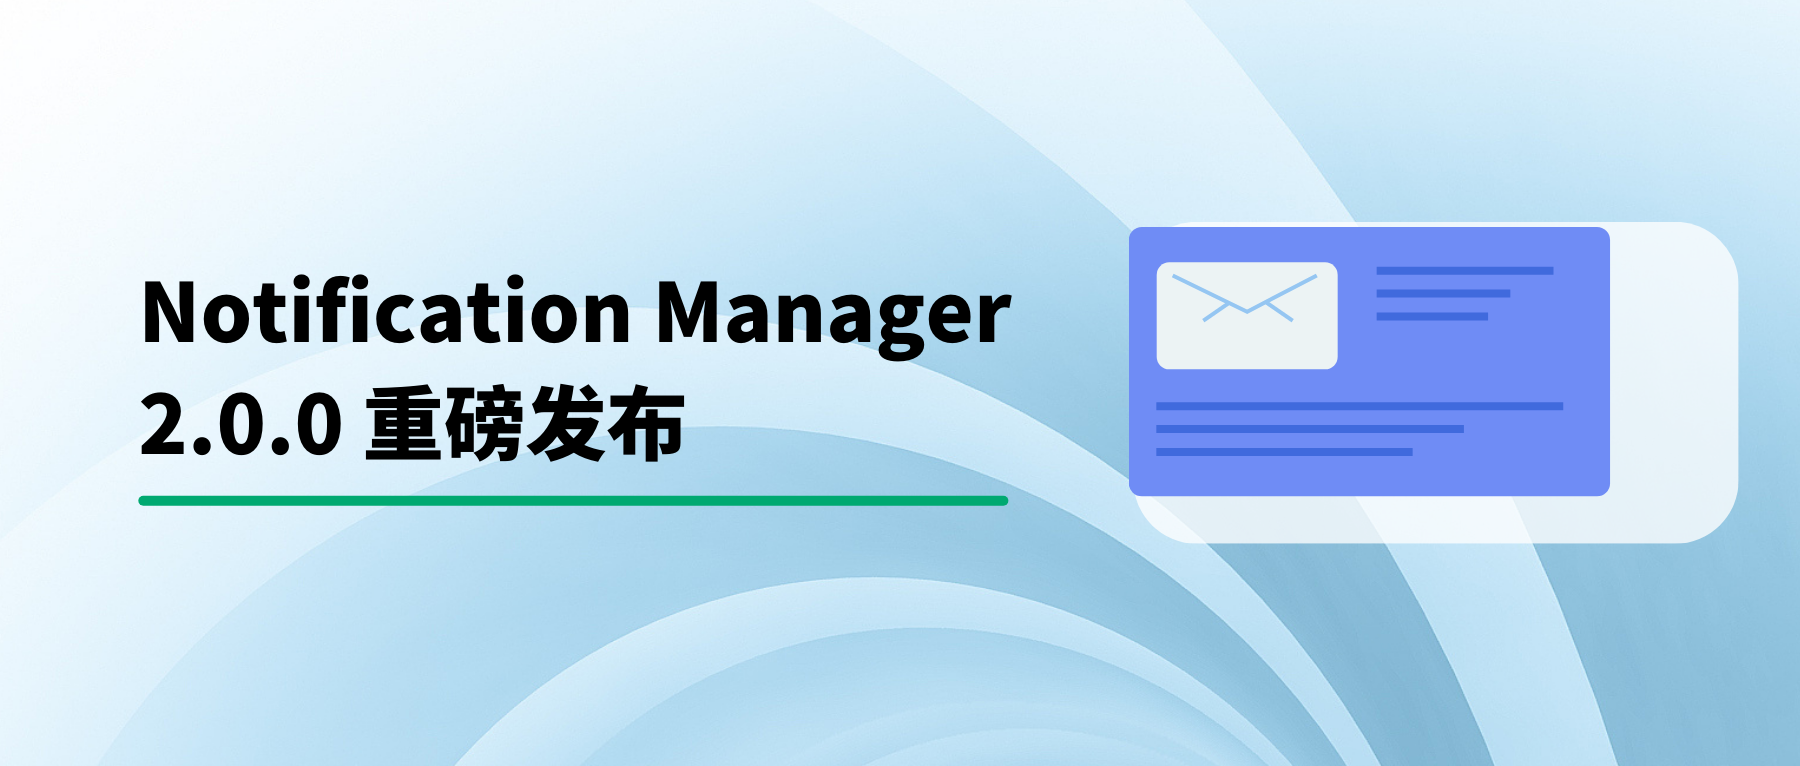 Notification Manager 2.0.0 发布：新增飞书通知、通知路由、通知静默